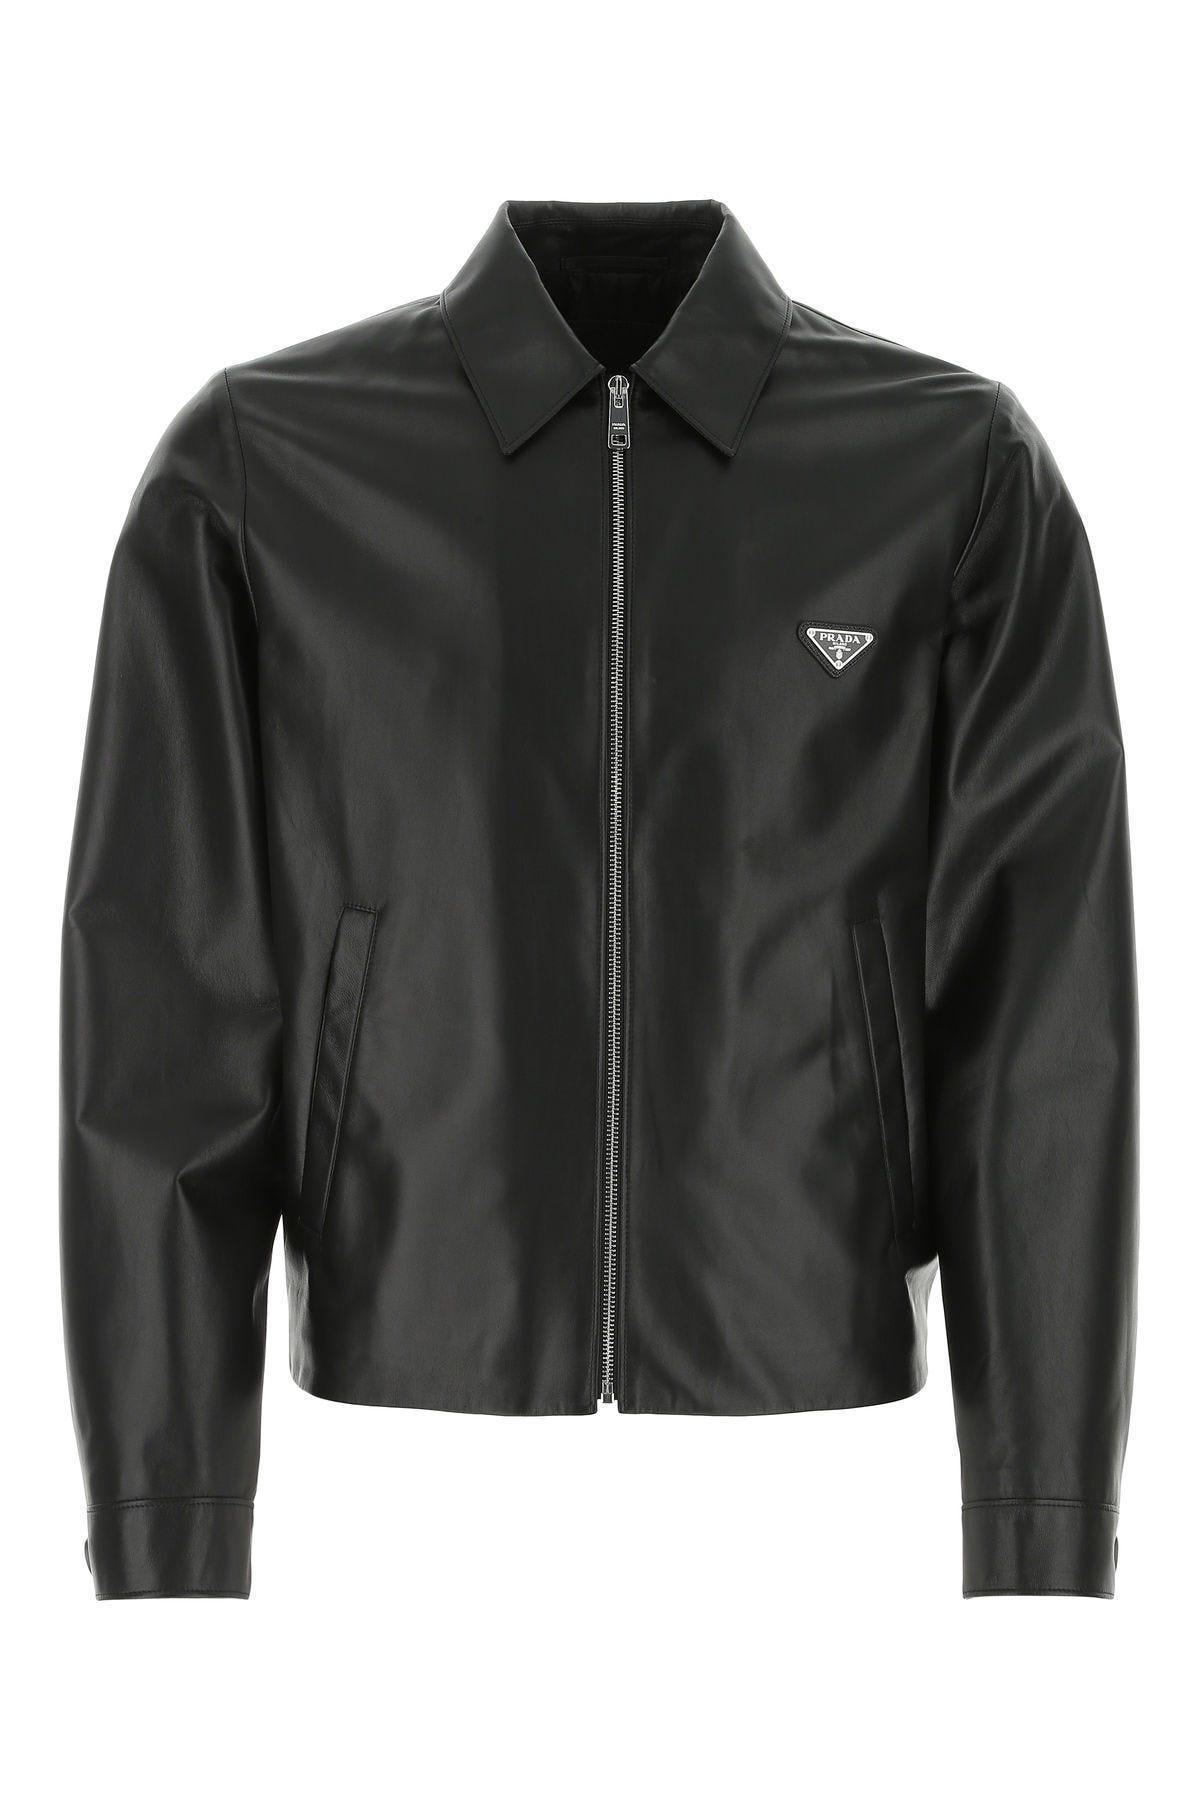 Prada Black Nappa Leather Jacket for Men | Lyst